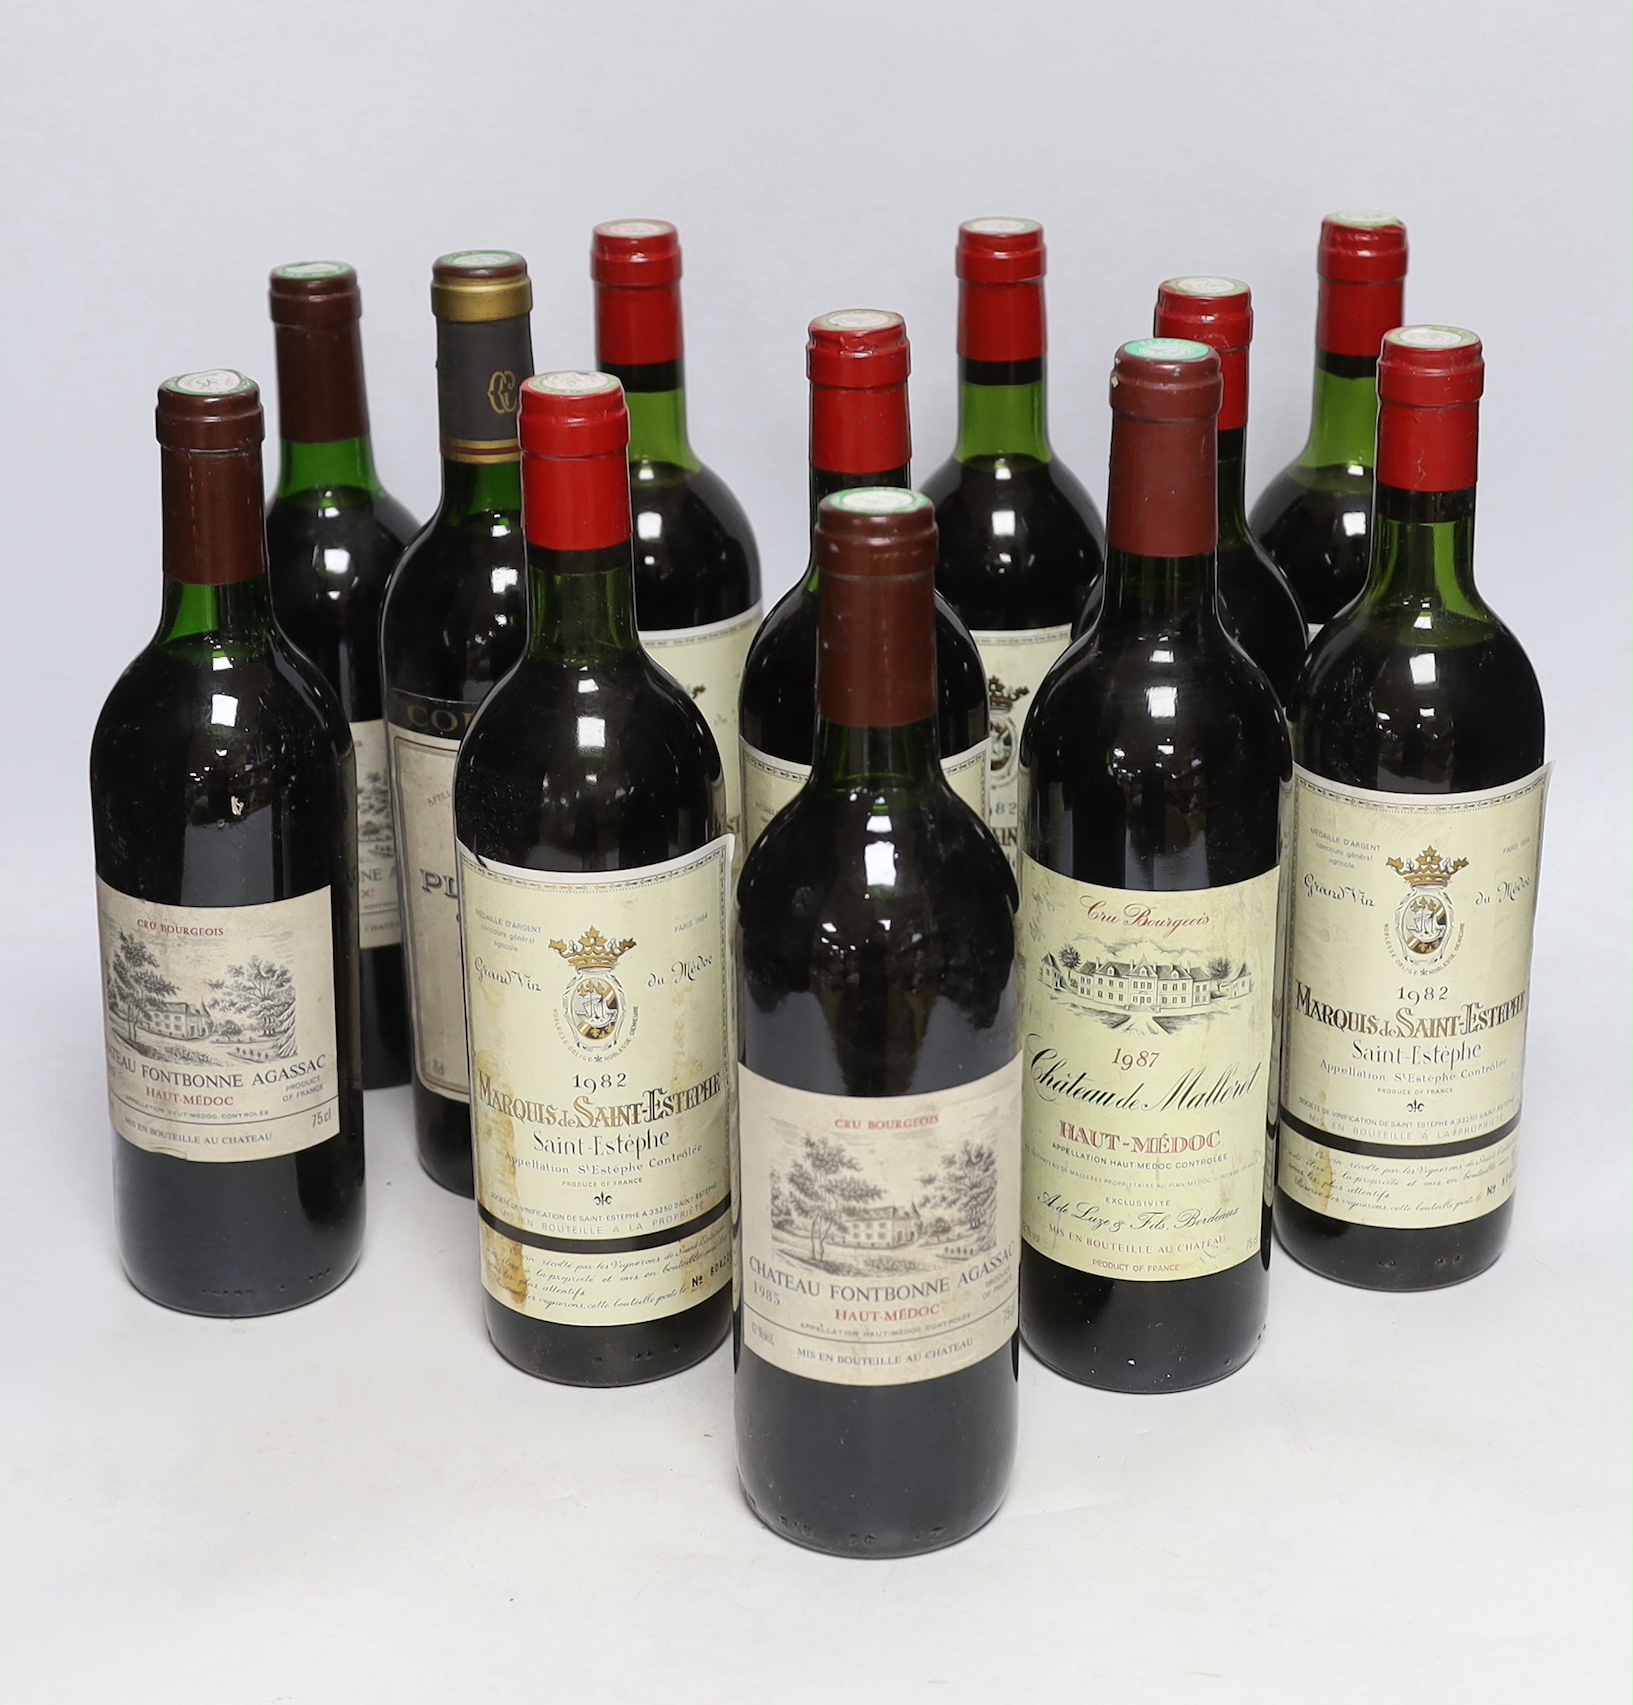 Seven bottles of Saint-Estephe 1982 and three bottles of Haute Medoc 1985 Chateau Fondbonne Agassac and one bottle Medoc 1984 Chateau Plagnac, wine